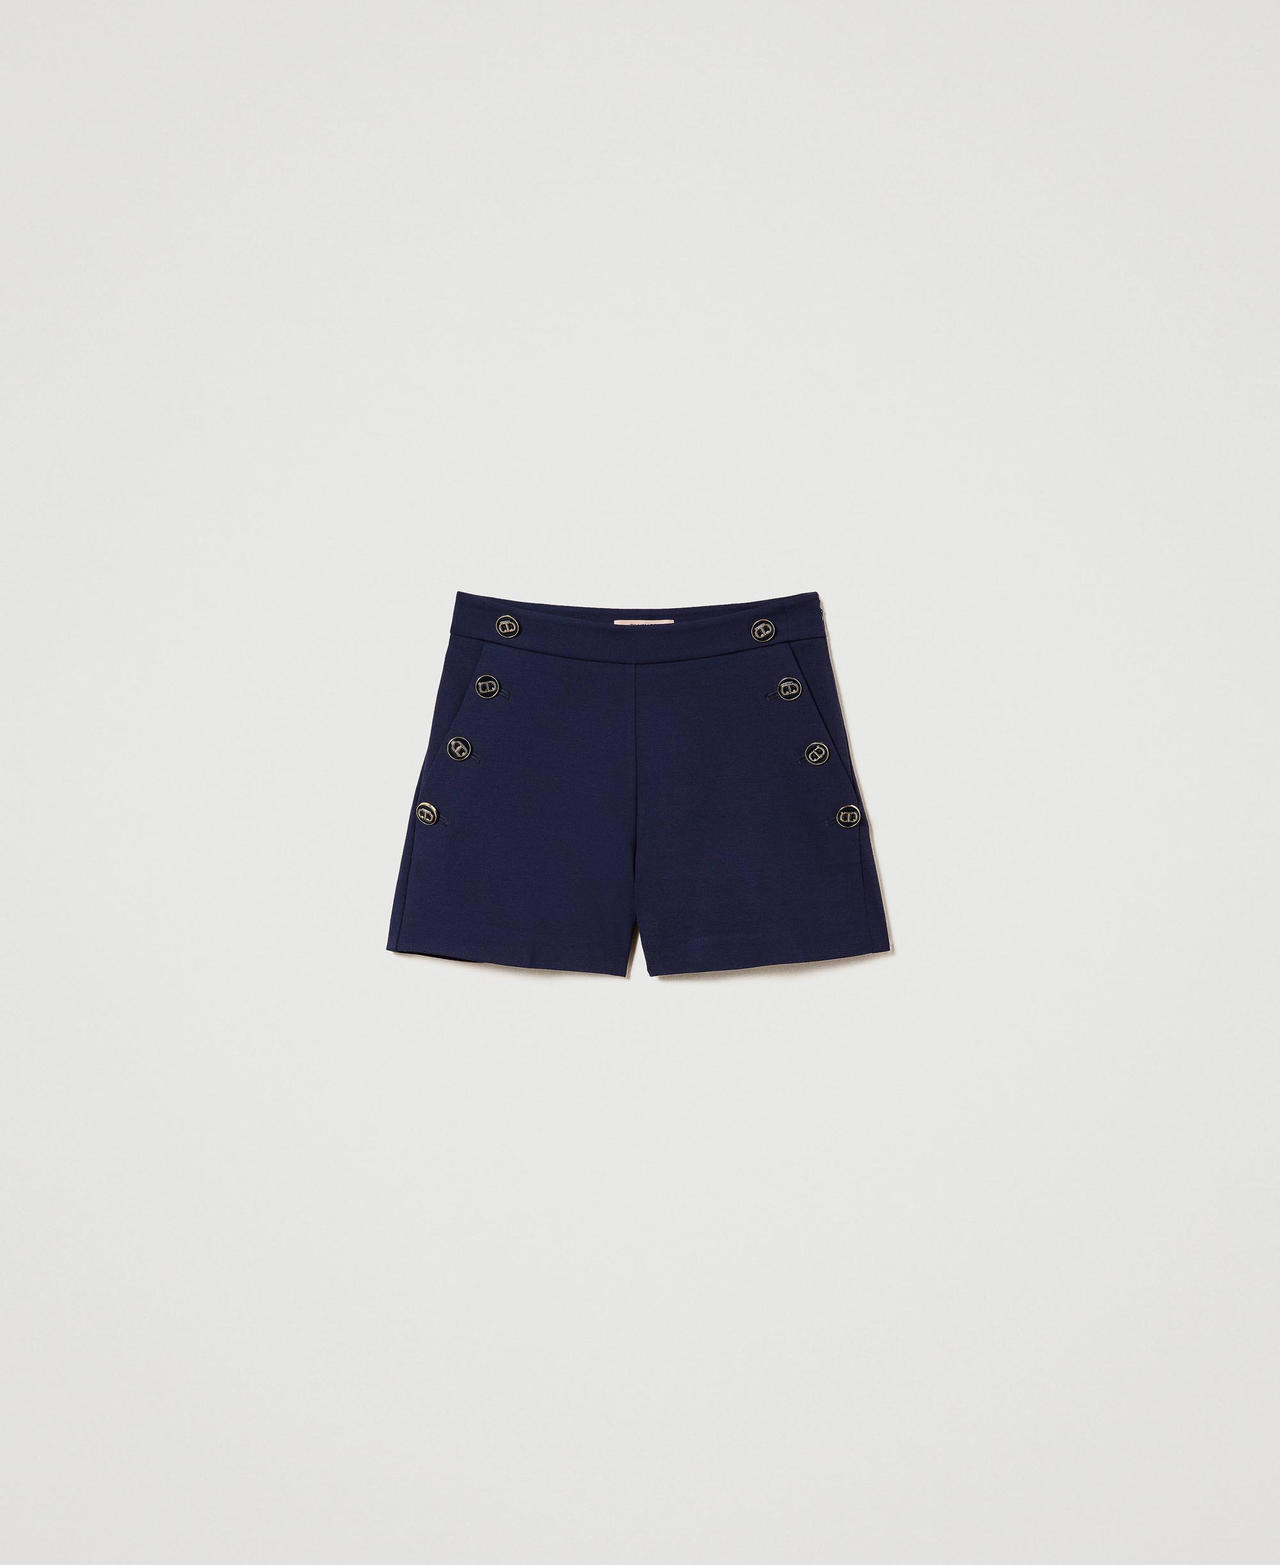 Pantalones cortos ceñidos con botones Oval T Azul Midnight Mujer 241TP2272-0S